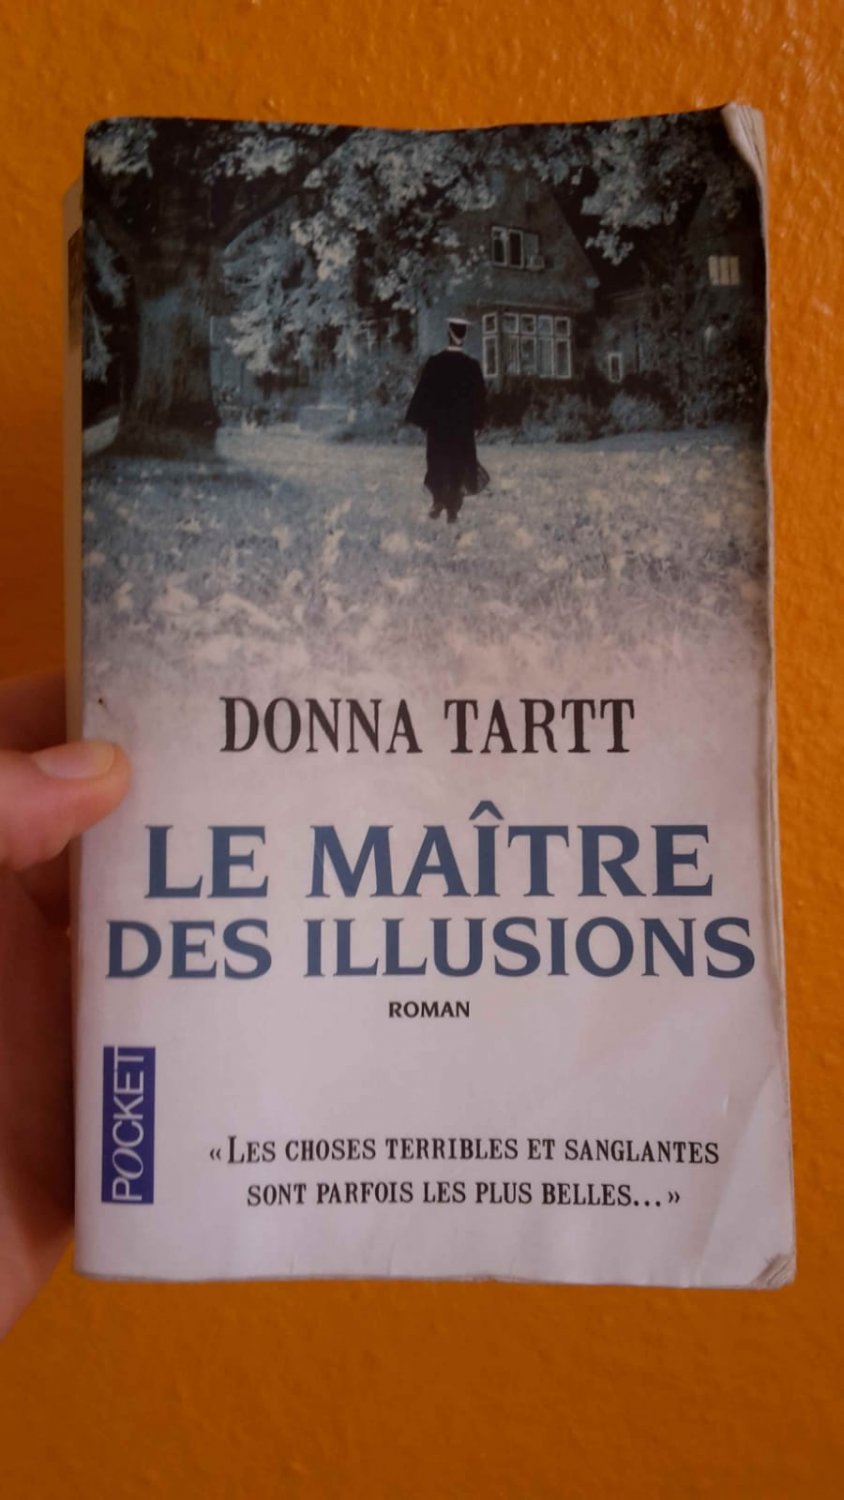 Le maître des illusions (Donna Tartt)